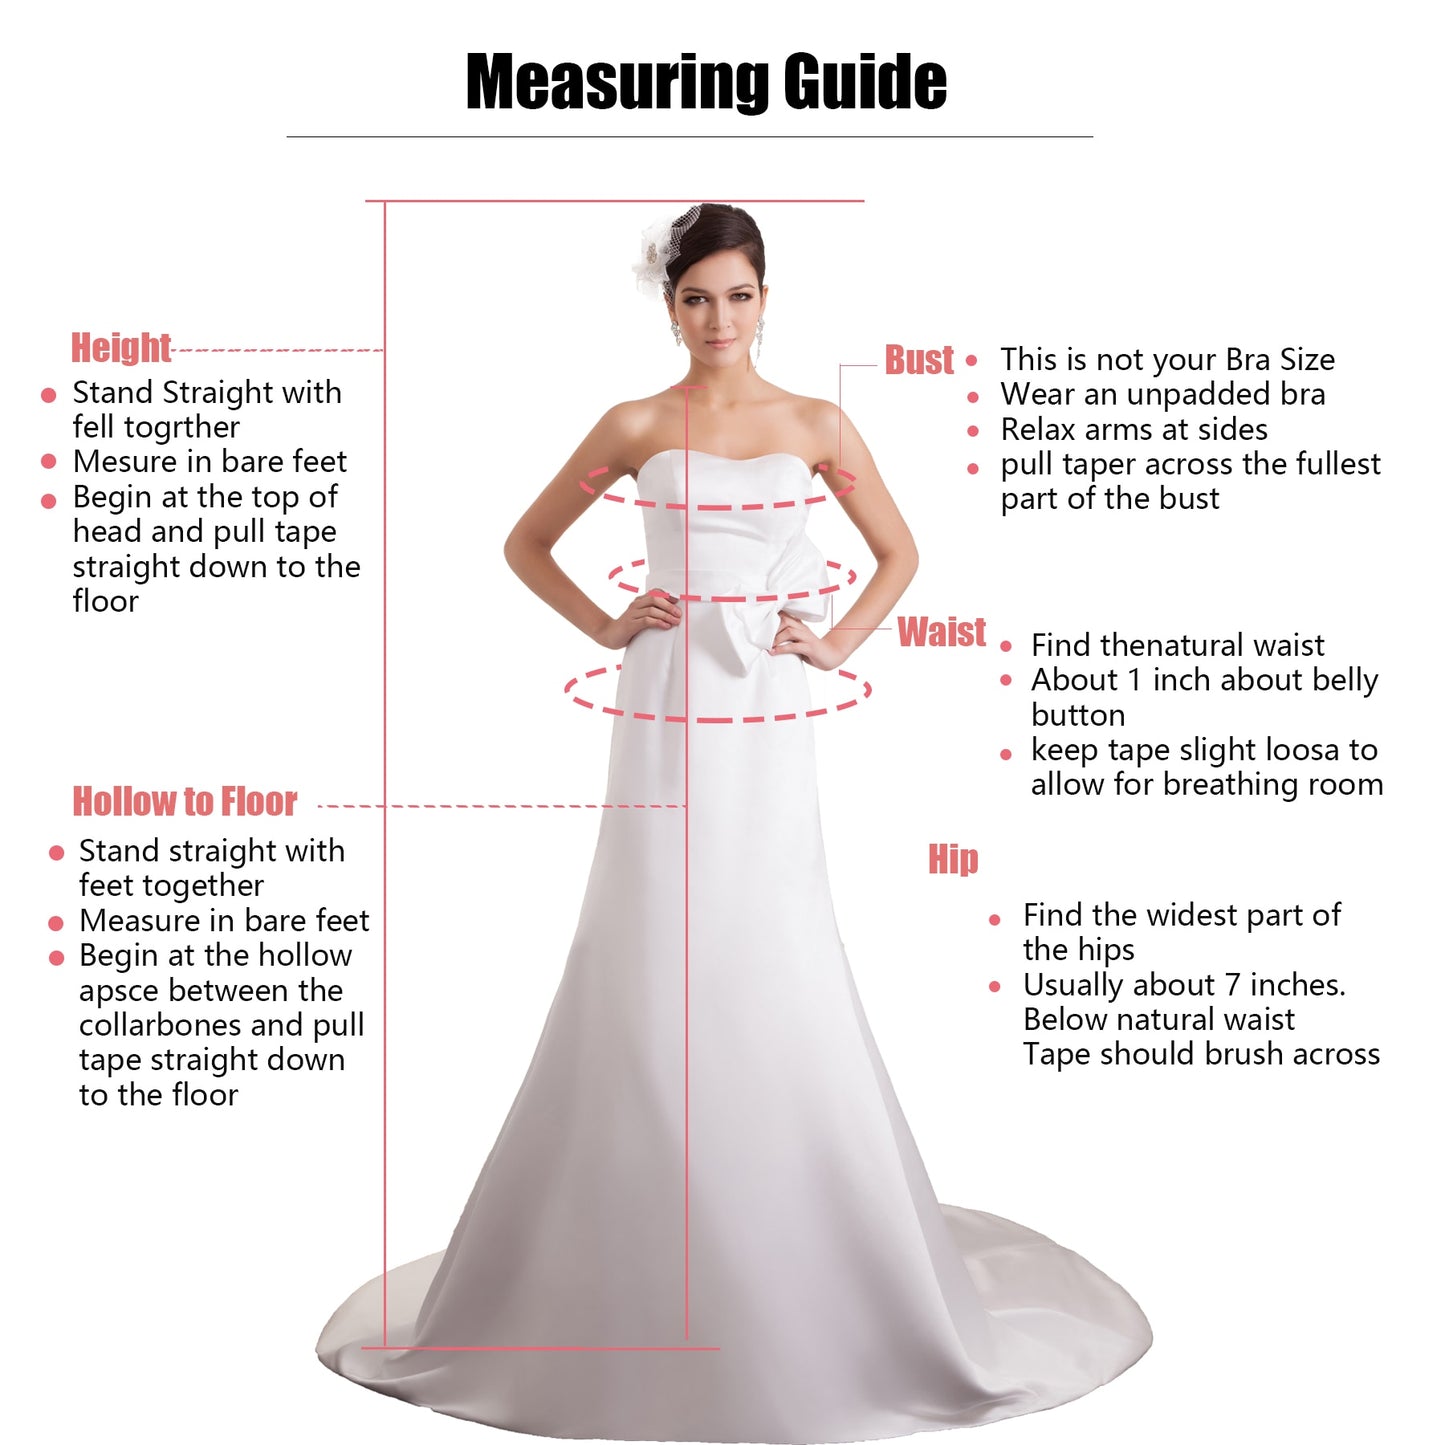 Elegant Mermaid Bridal Dress with Detachable Skirt